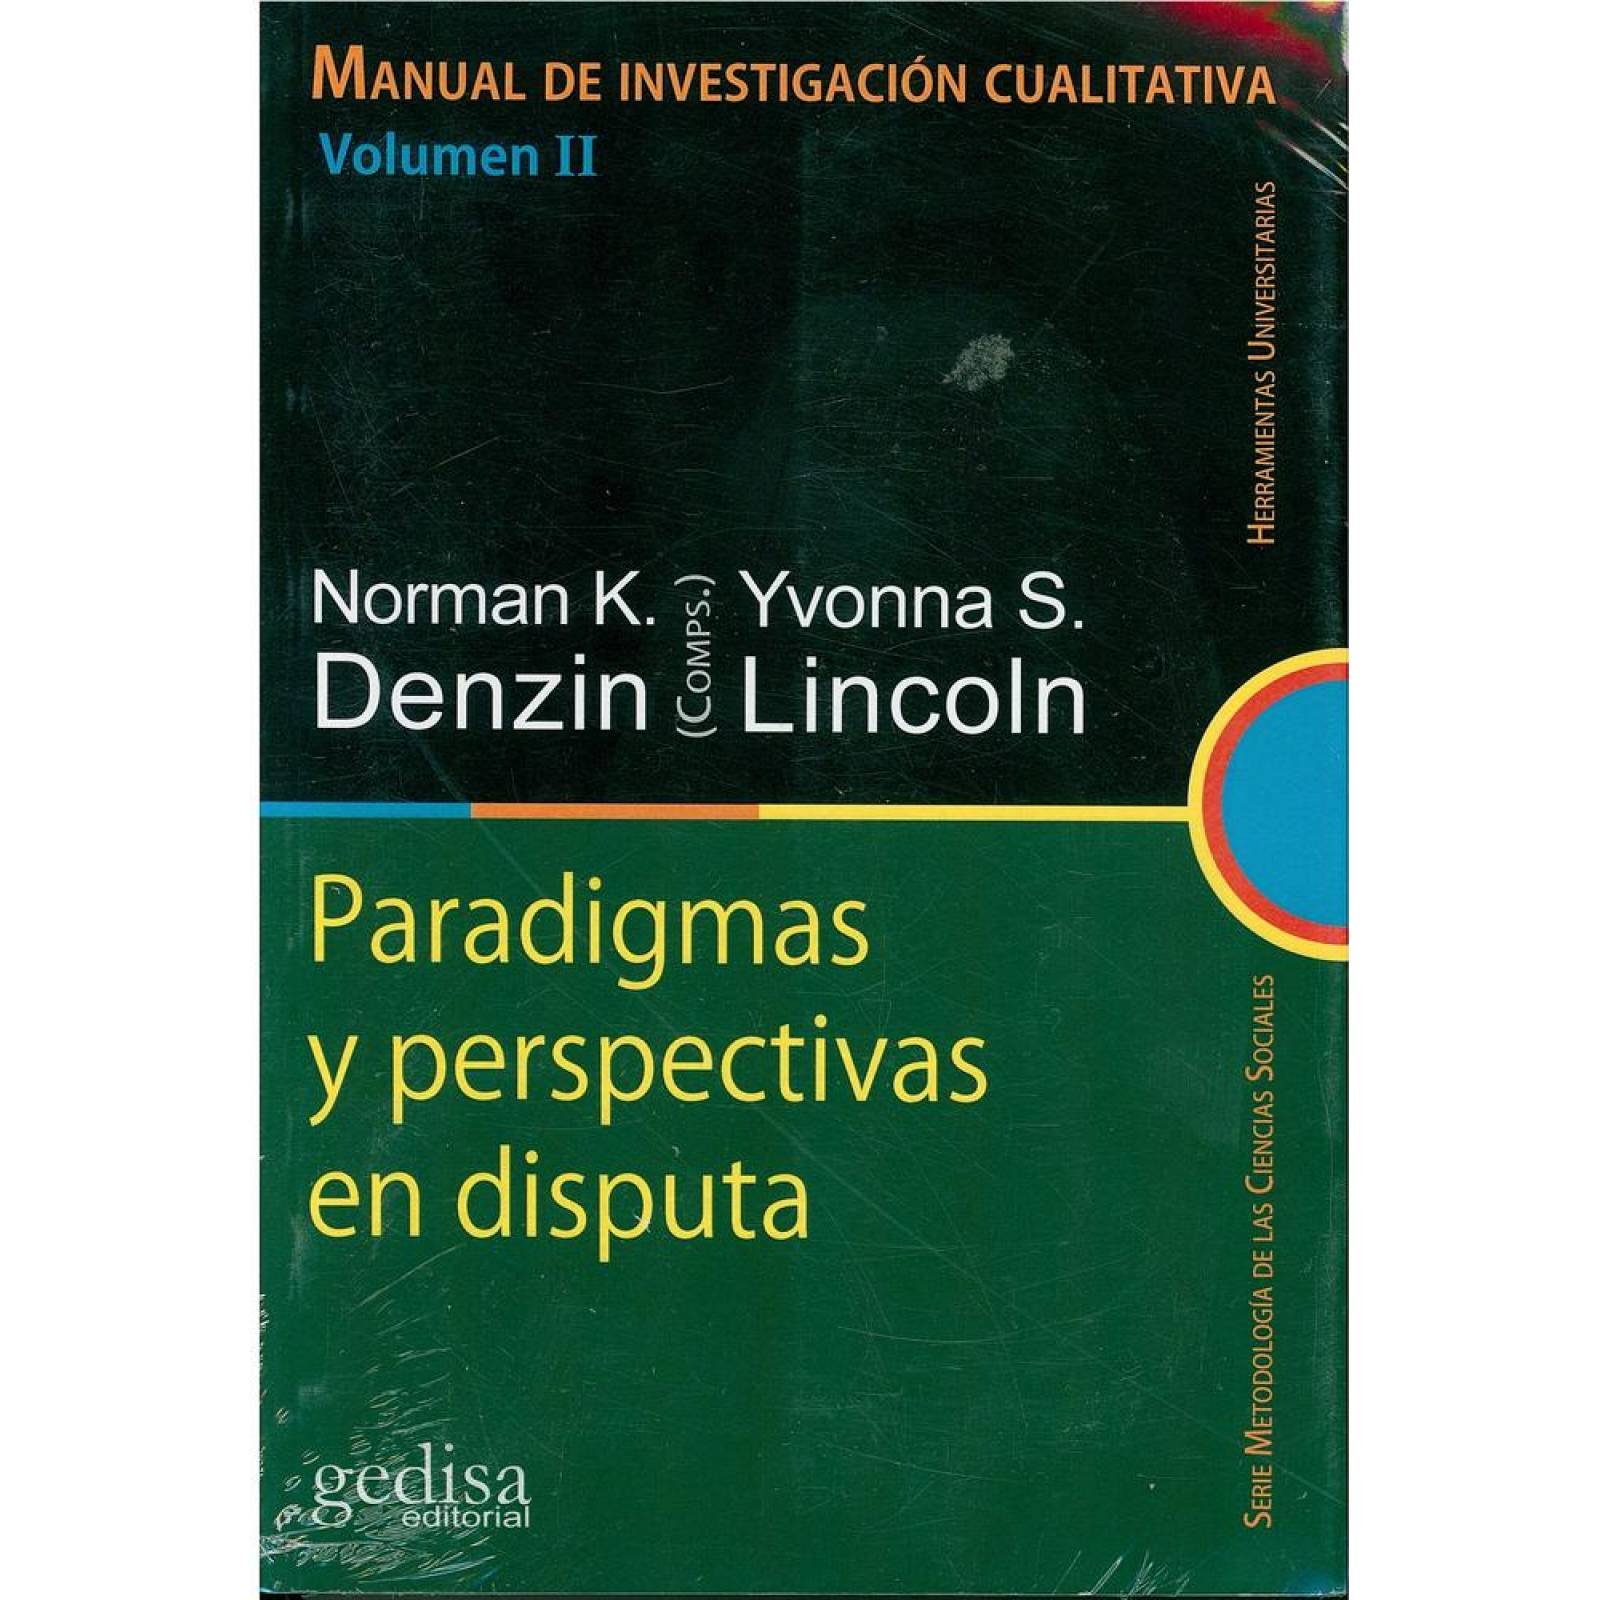 Manual de investigacion cualitativa Volumen II 